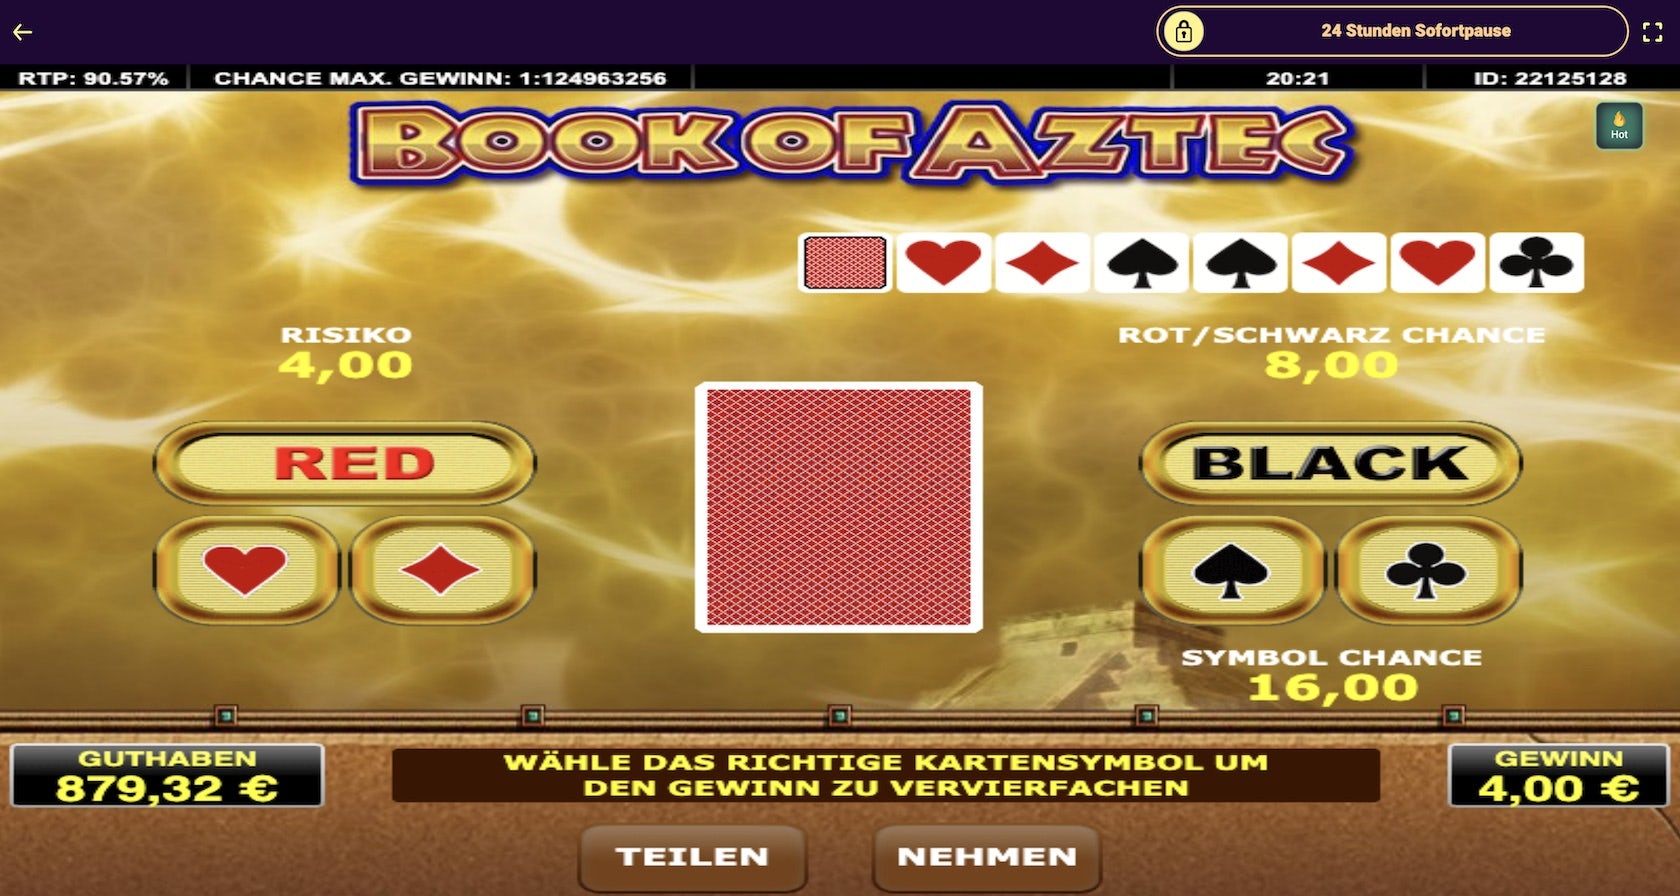 book-of-aztec-online-spielen-risiko